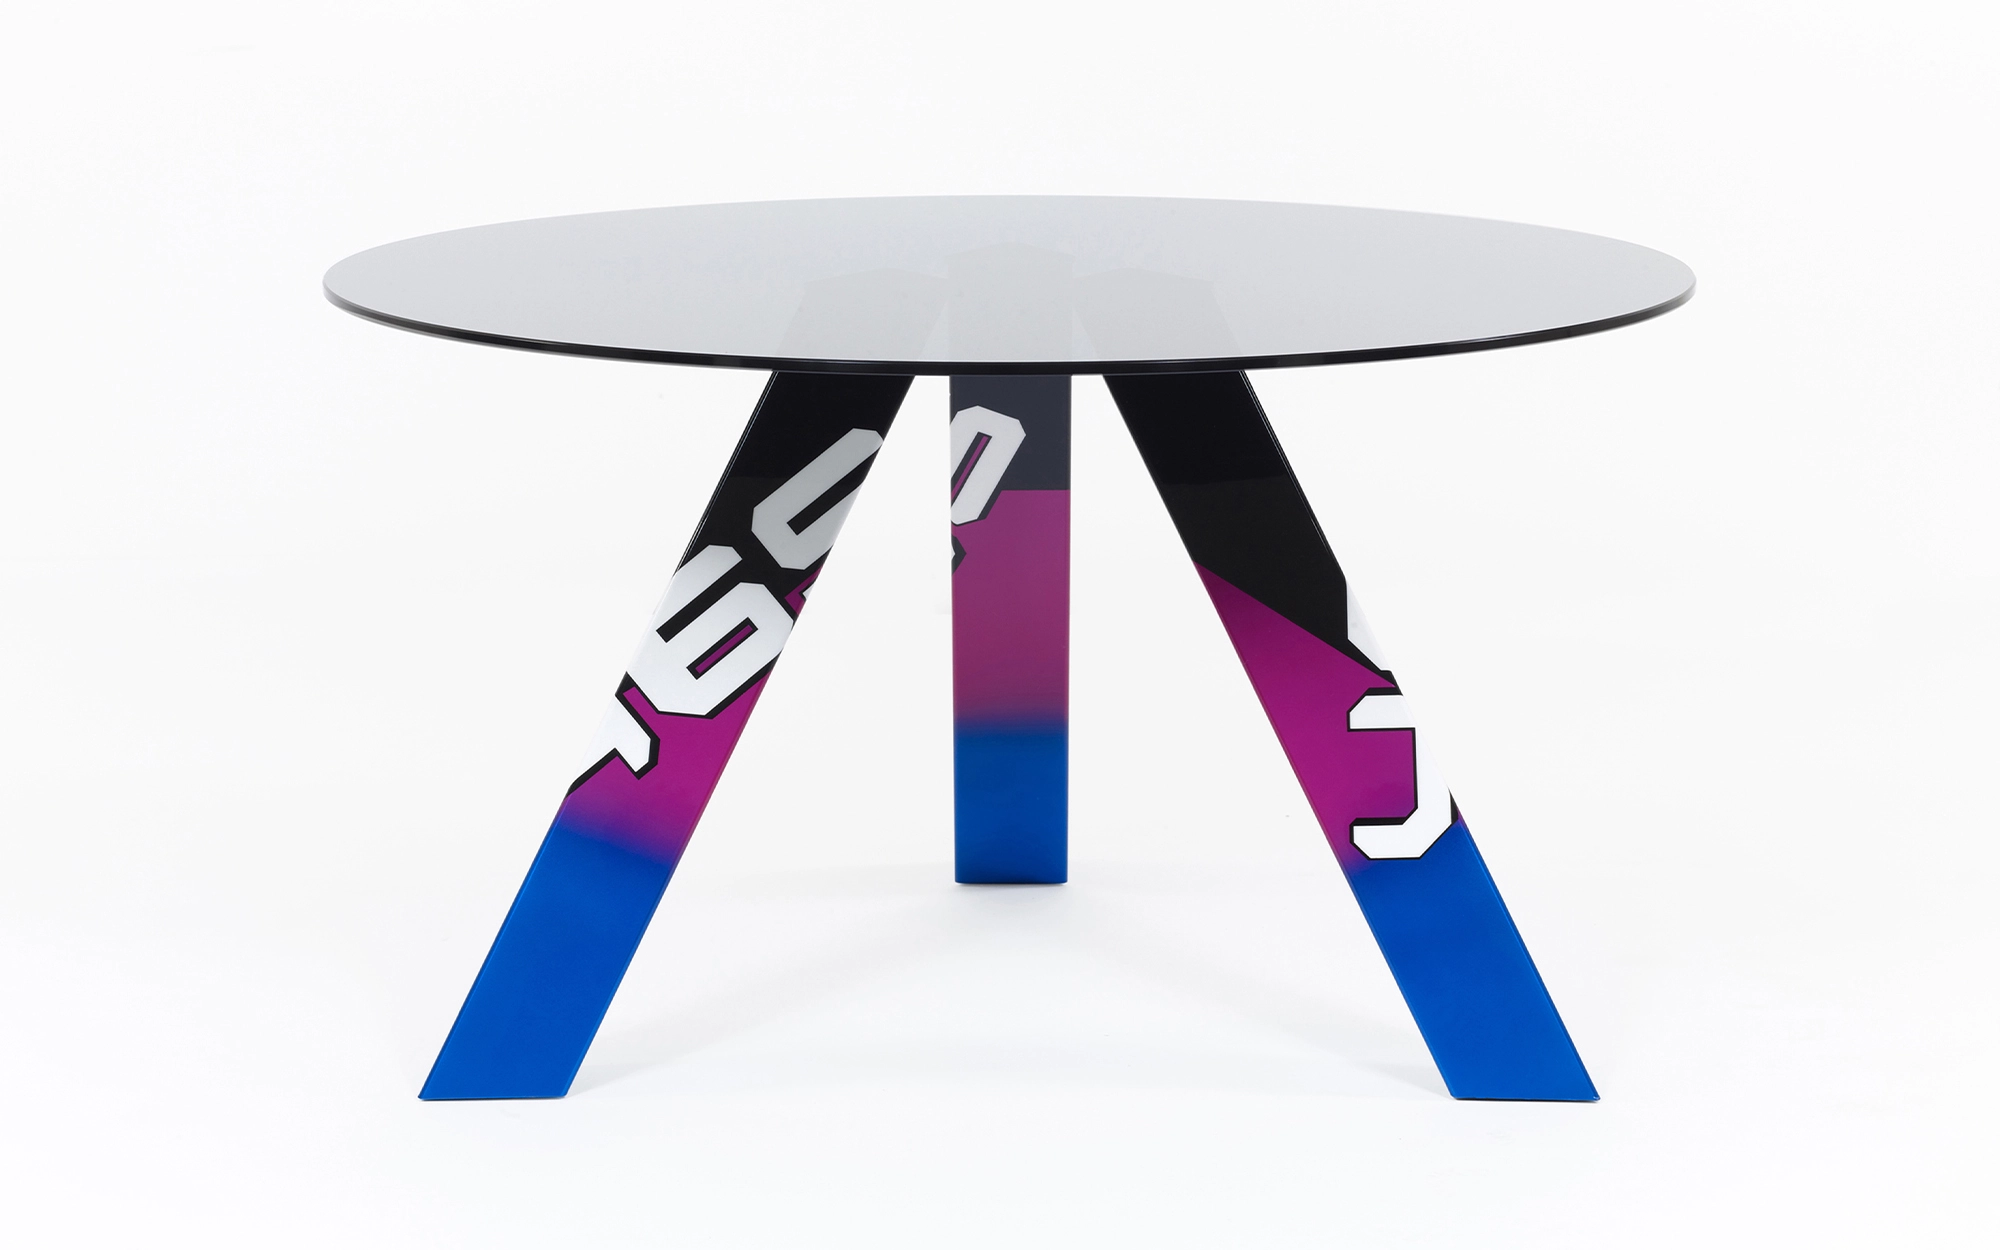 465 Table - Konstantin Grcic - Miscellaneous - Galerie kreo